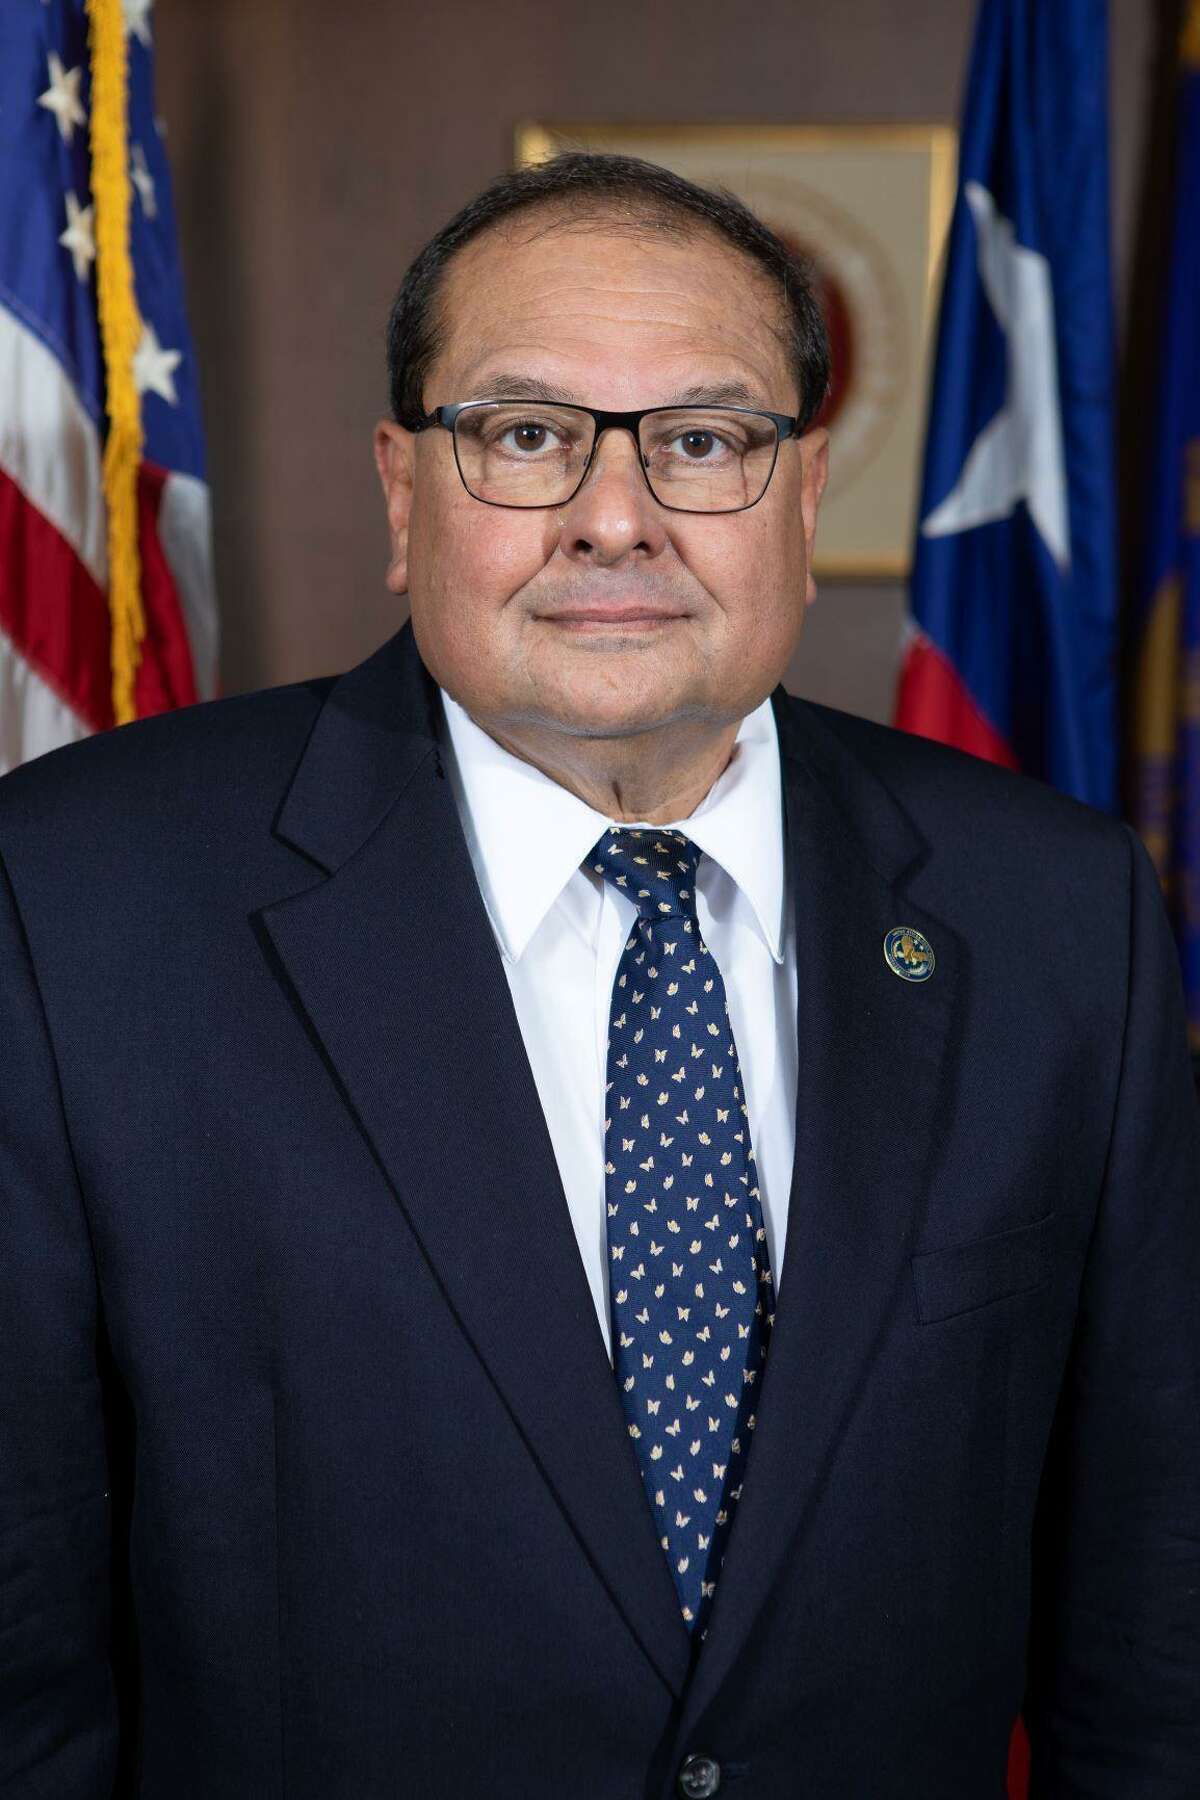 Windcrest City Councilman Frank Archuleta